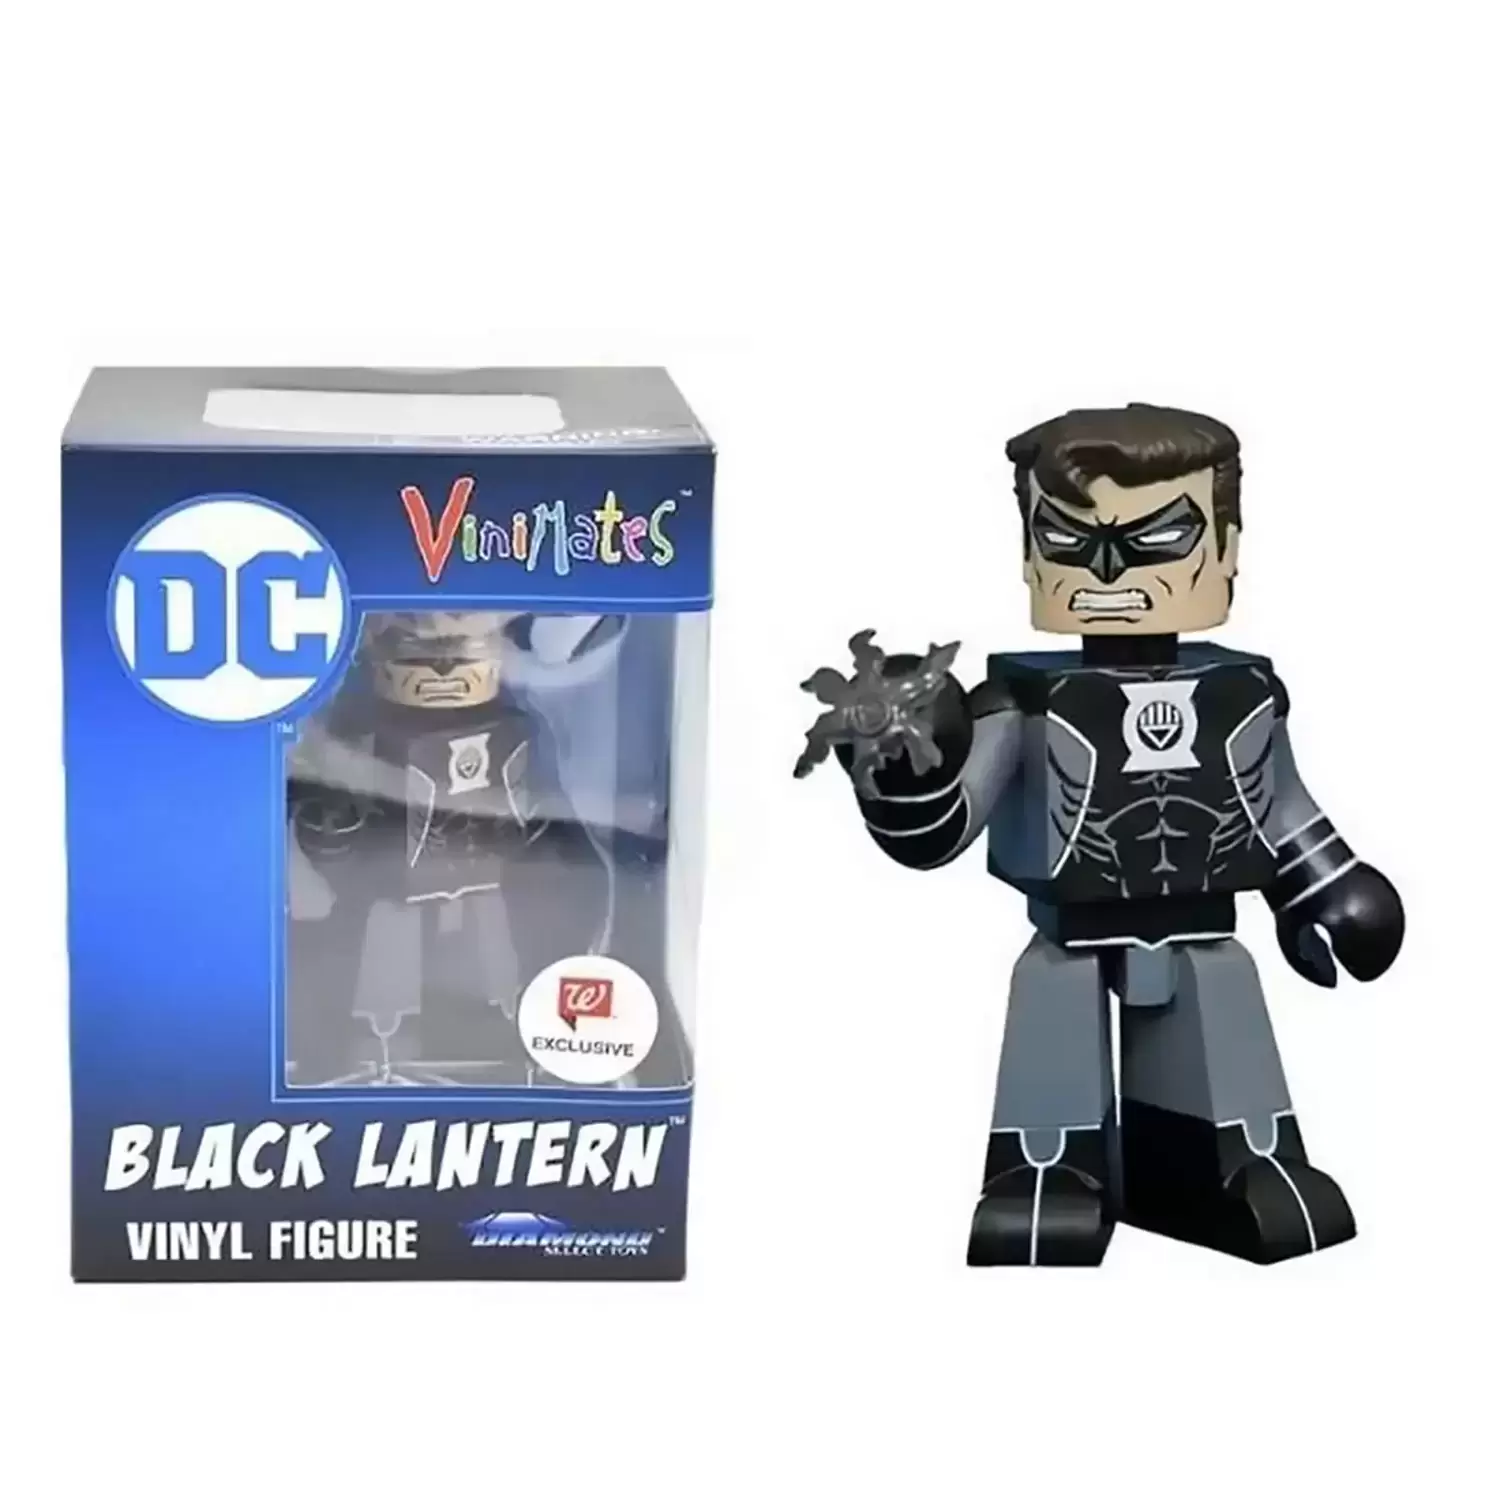 Vinimates - DC Comics - Black Lantern